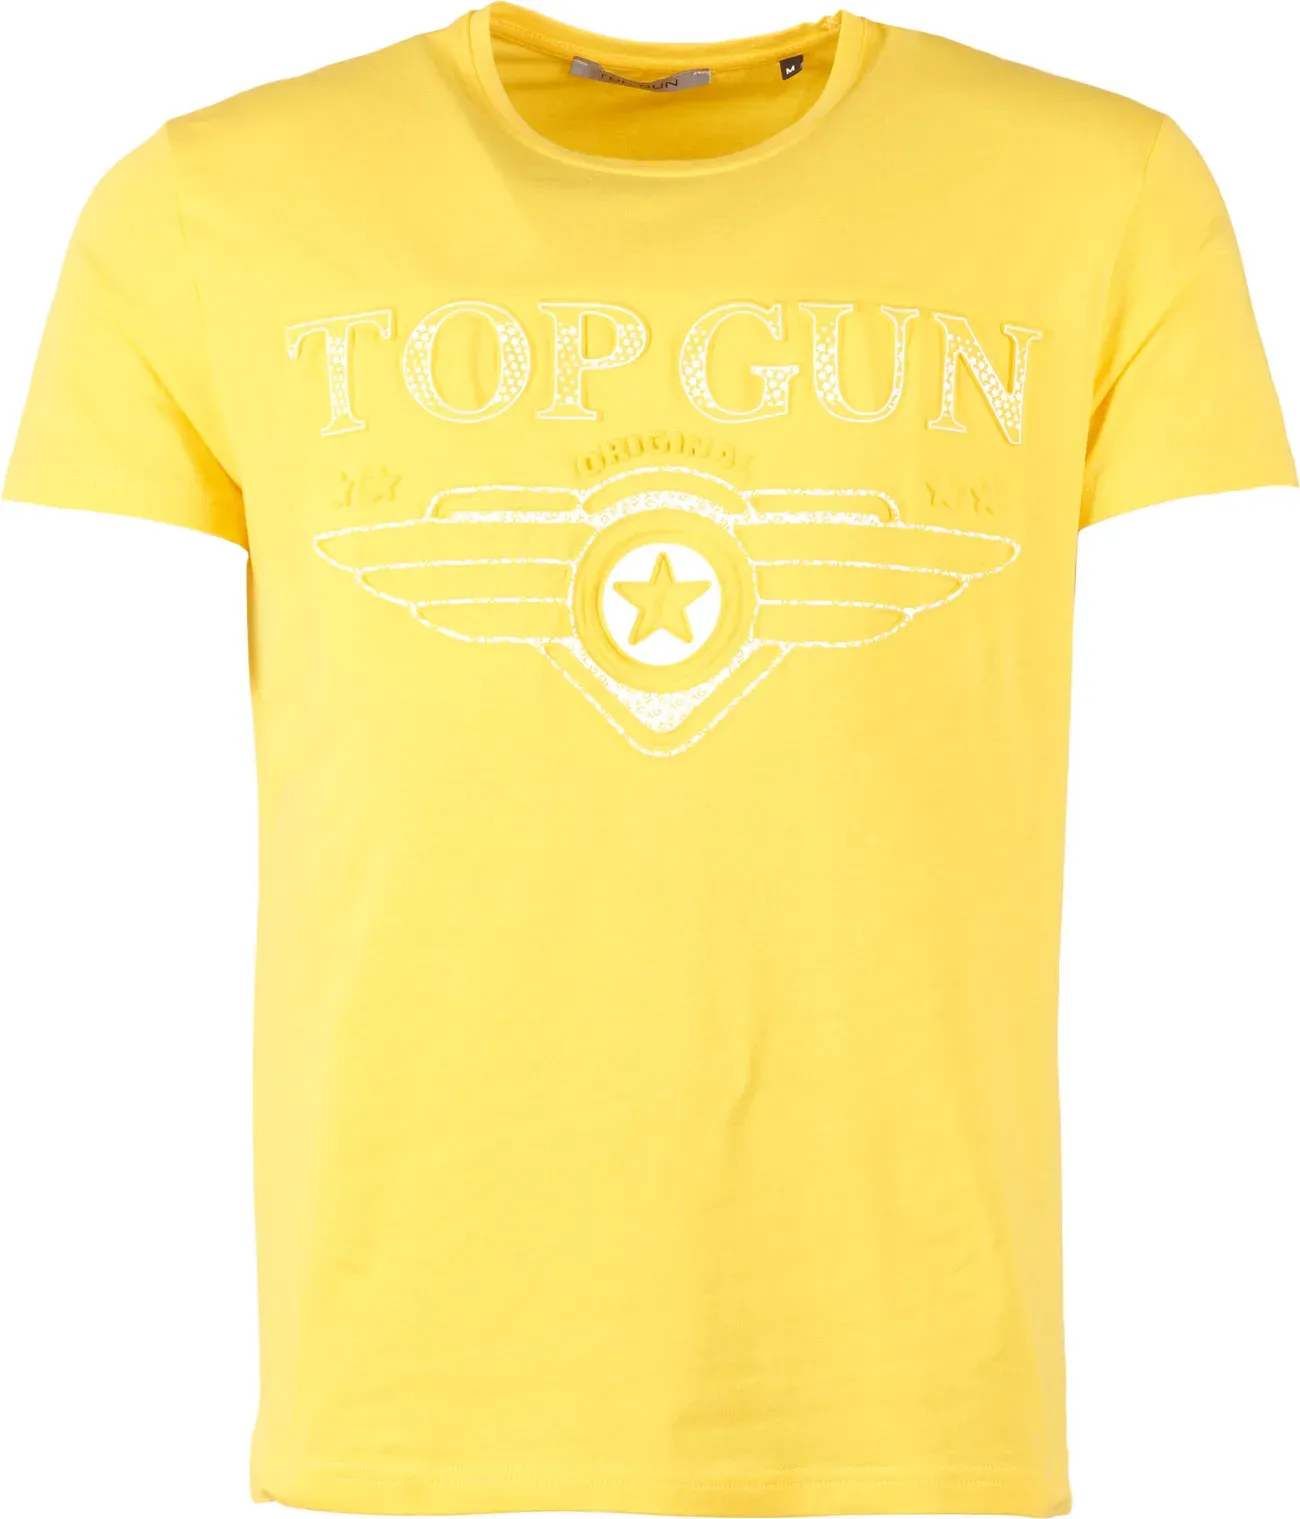 Top Gun Bling, t-shirt - Jaune - S